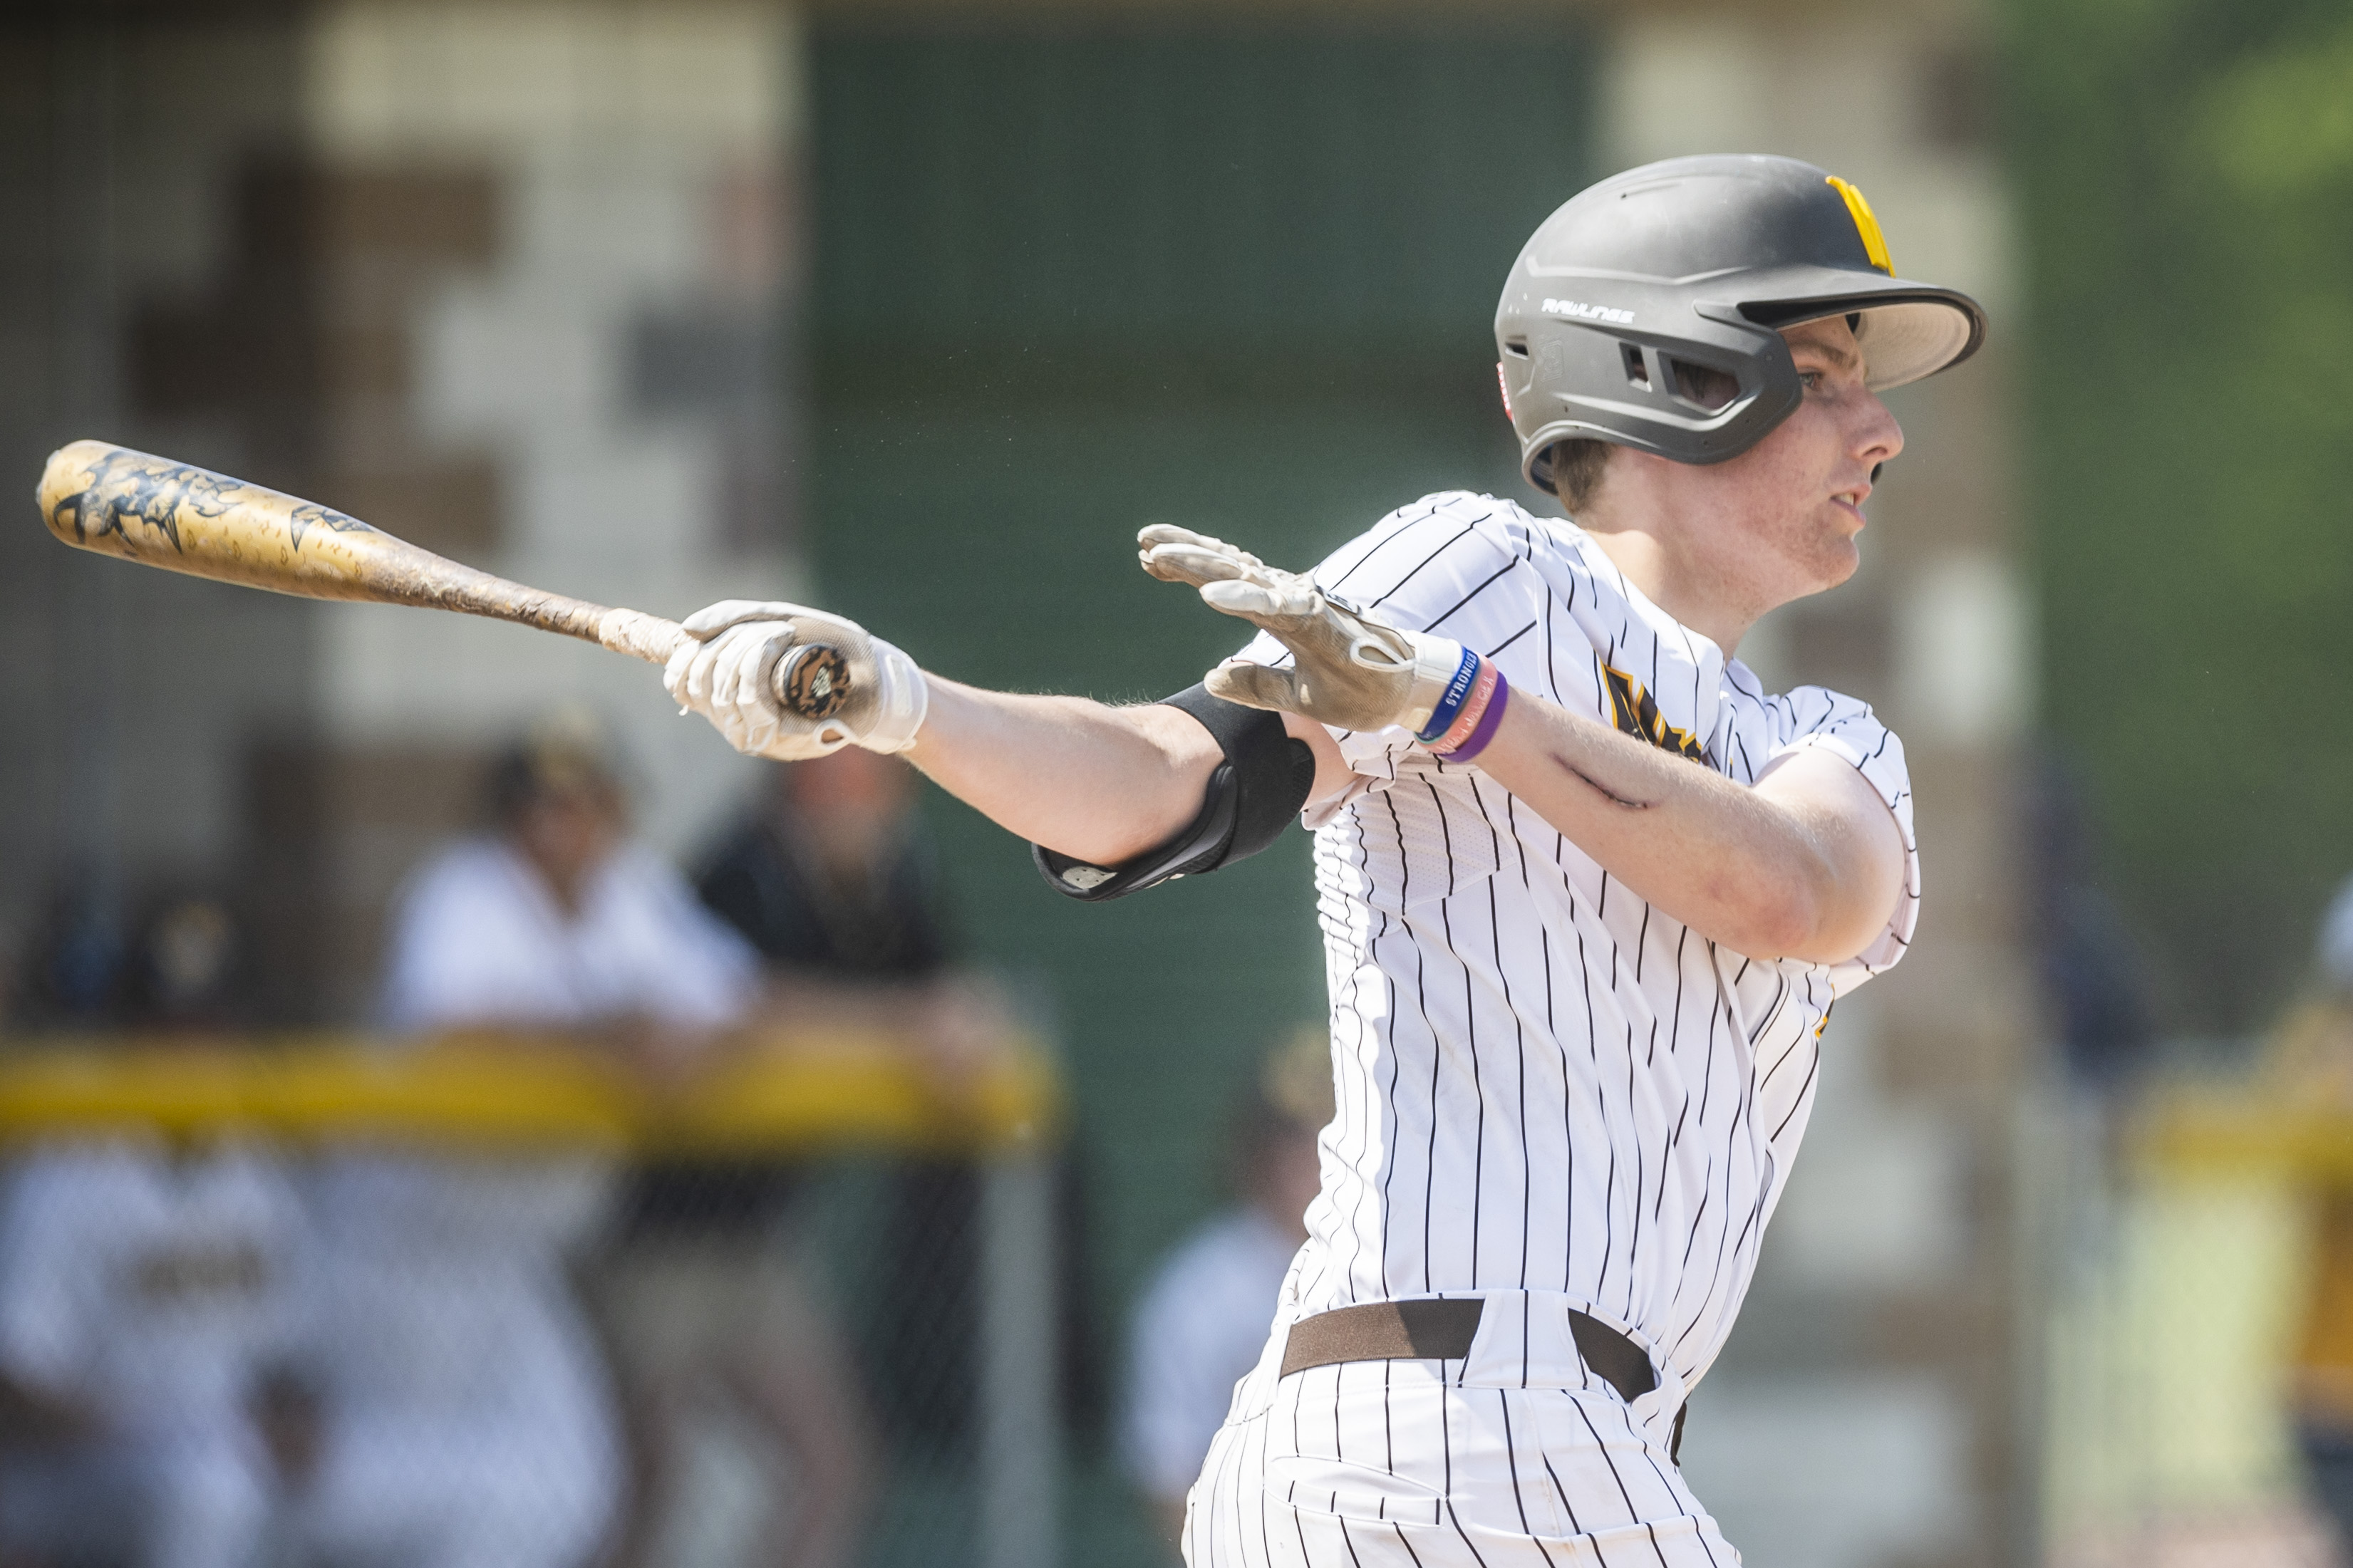 Local baseball players shine in Michigan High School All-Star game